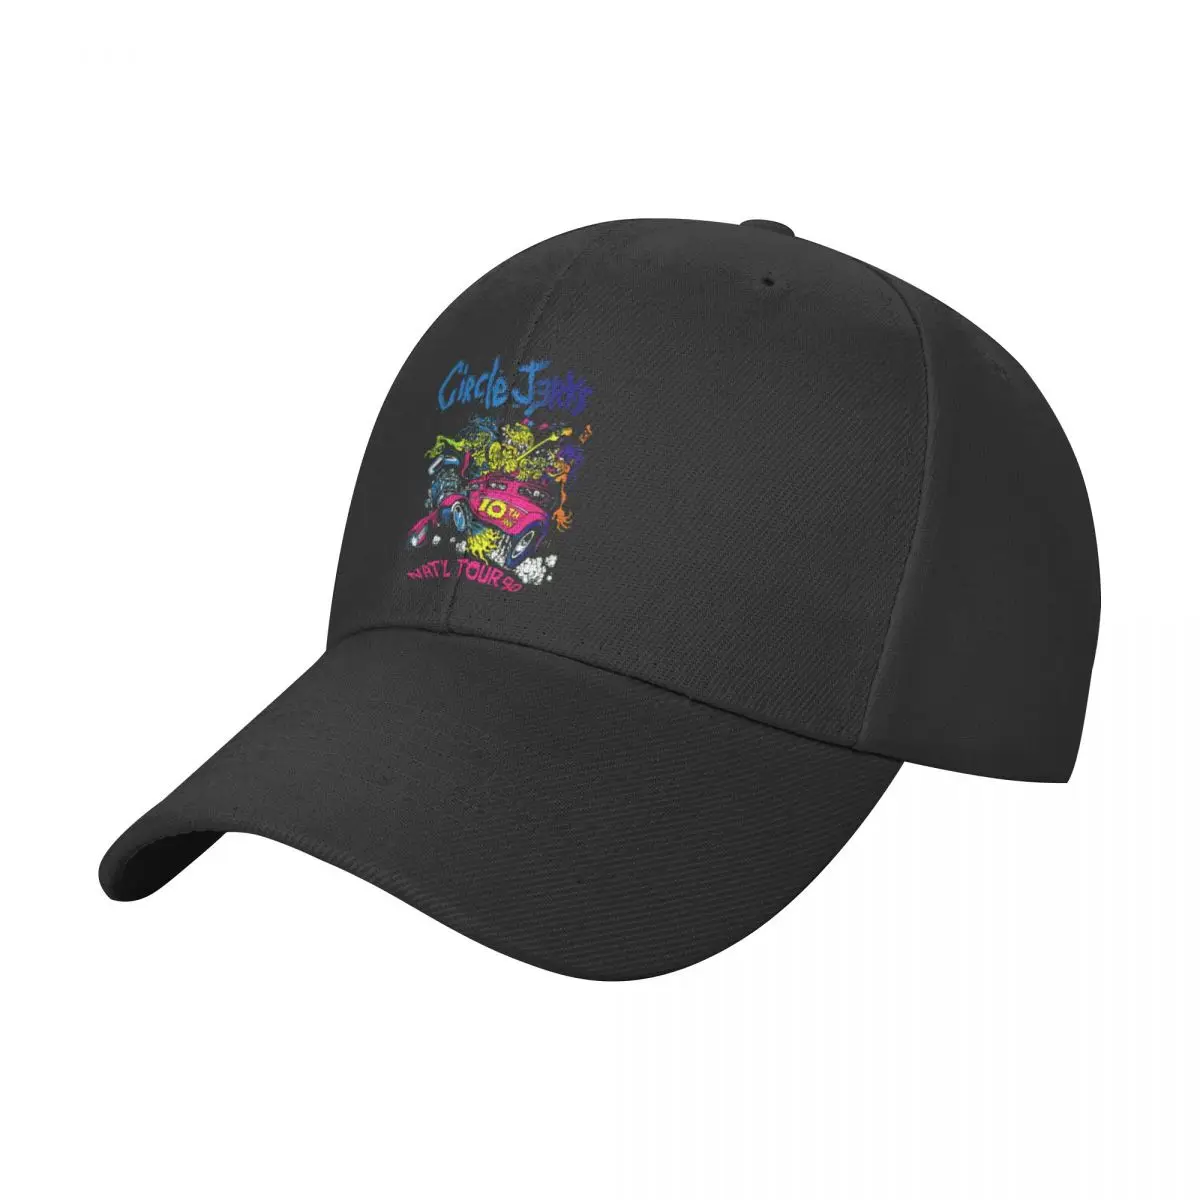 

Nat'l Tour 1990 > Circle Jerks Trending Zipped Hoodie Baseball Cap derby hat Trucker Hat Snap Back Hat dad Ladies Men's